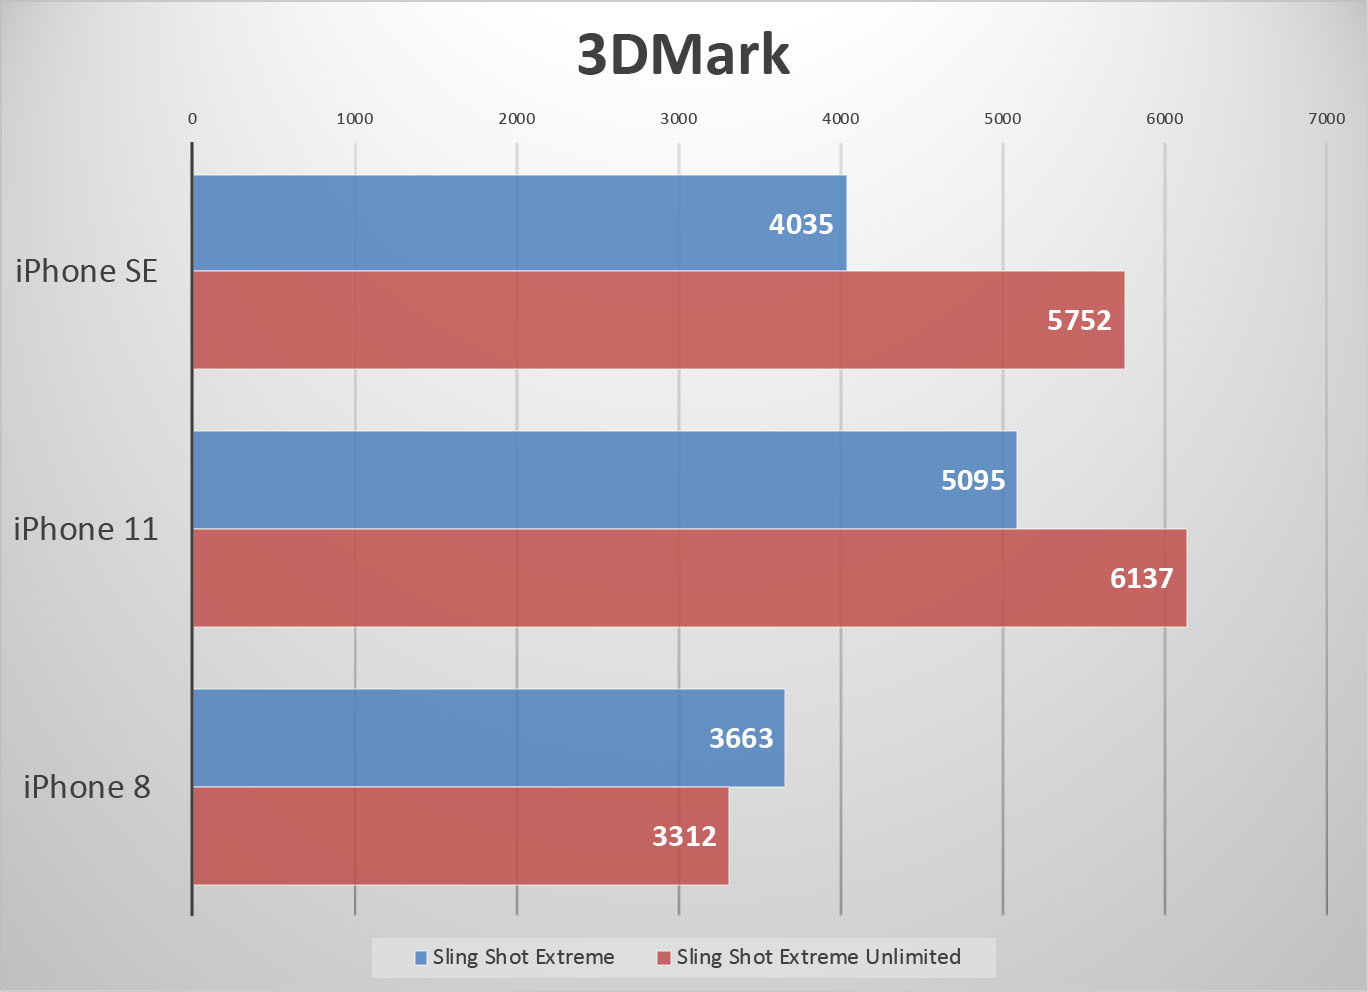 جدول مقایسه آیفون ها براساس 3DMark